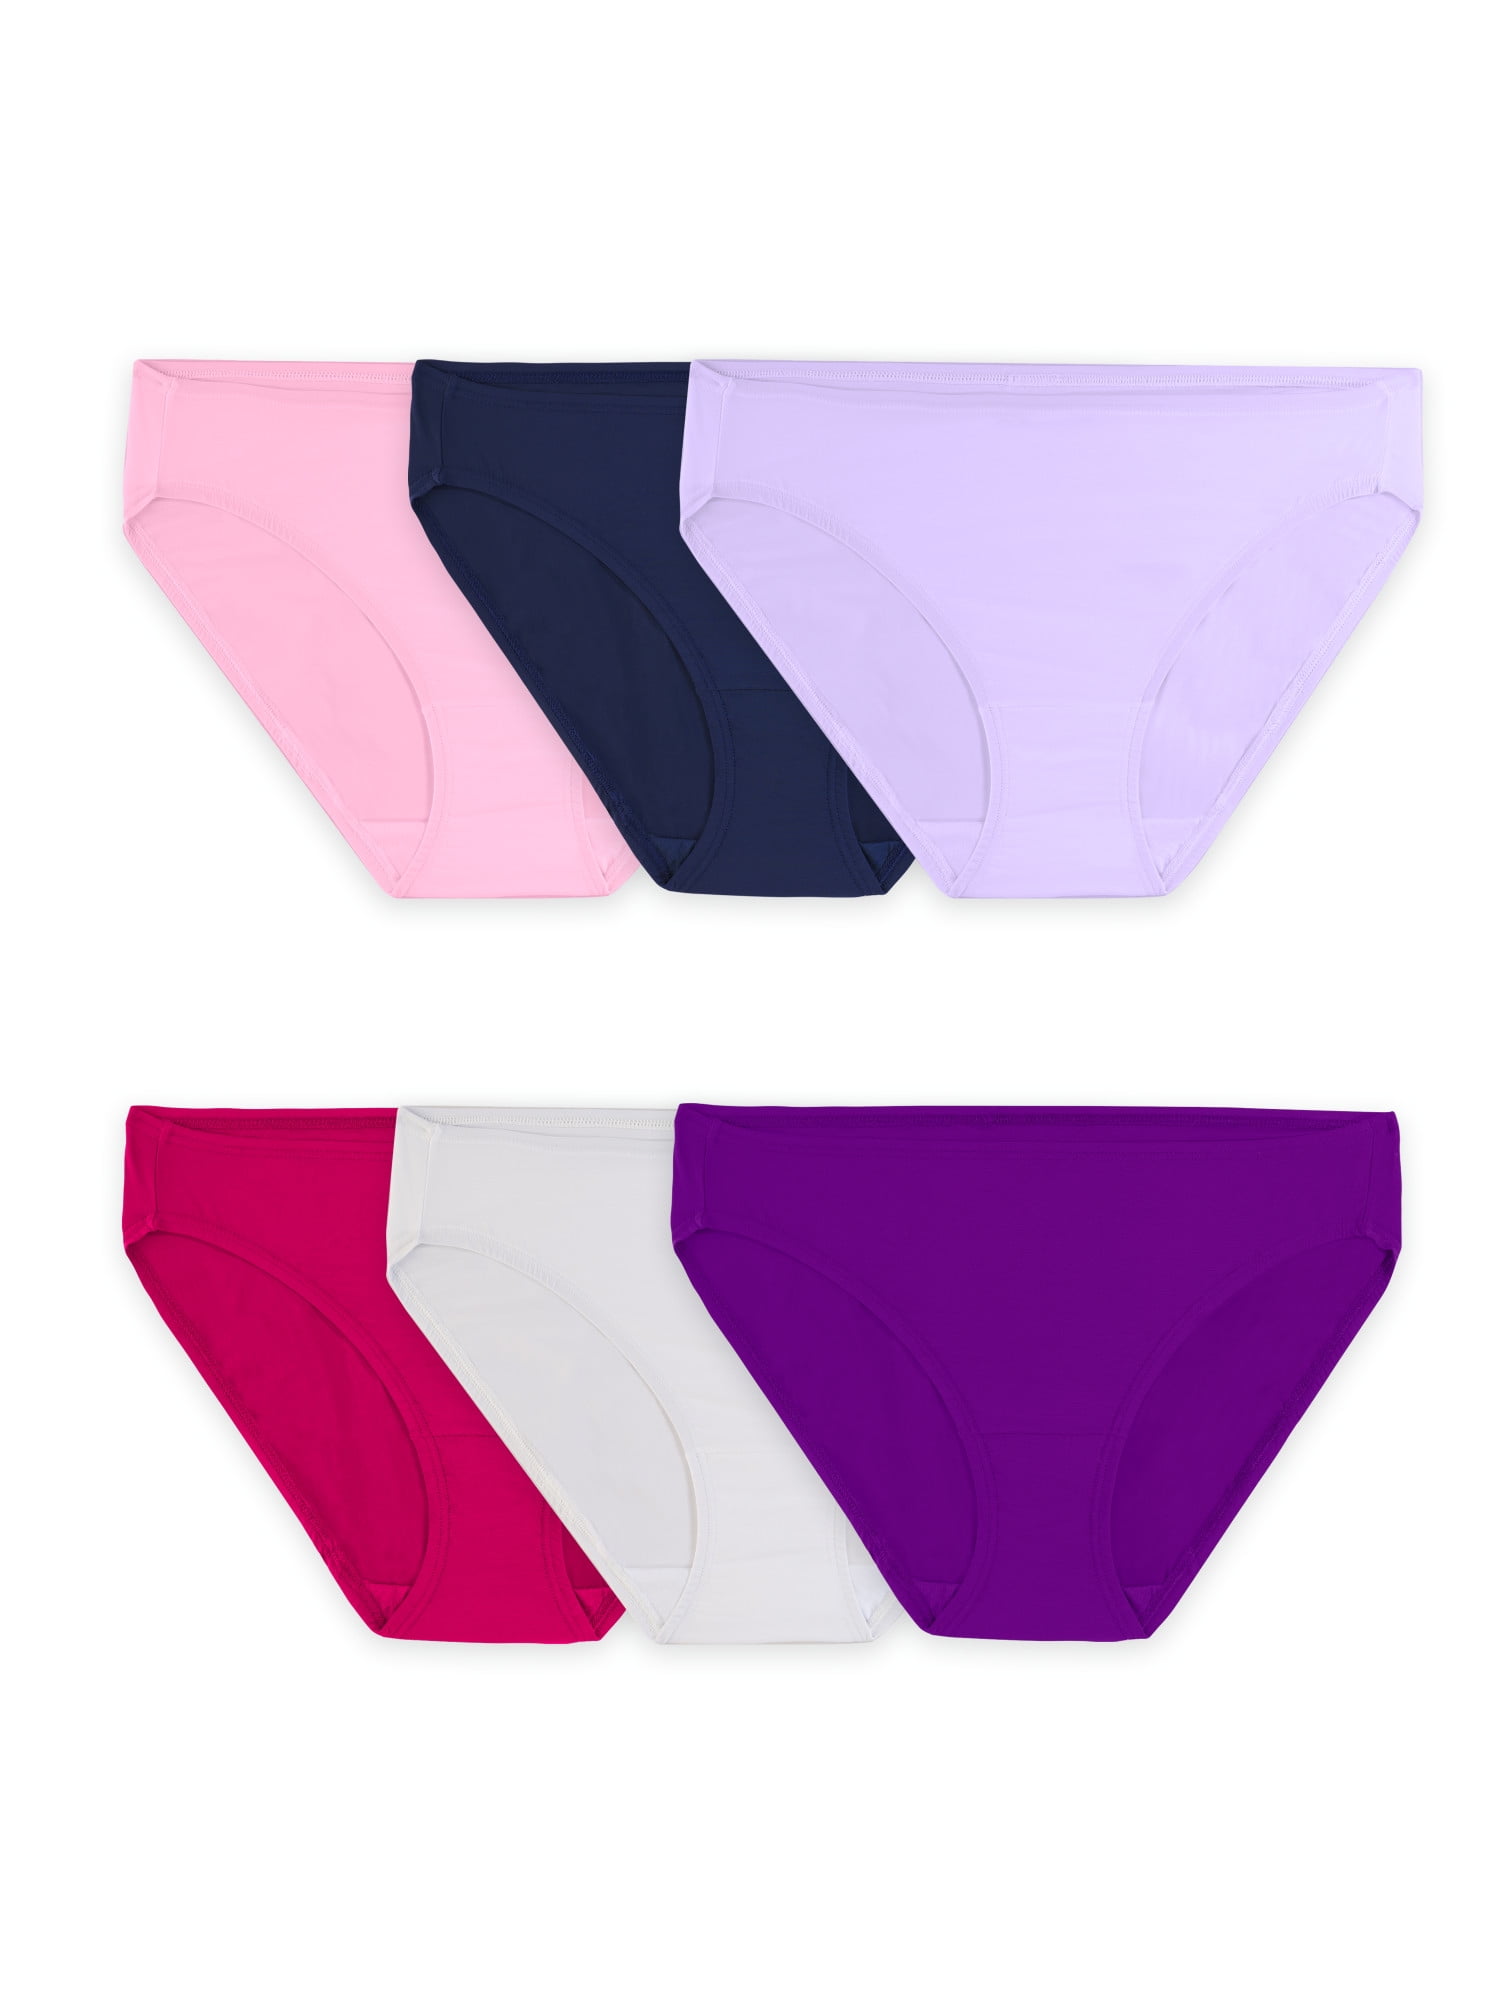 Fruit of the Loom Girls' Big Seamless Bikini, Neon Pink/Black, Size X-Large  HTVC 646007490347